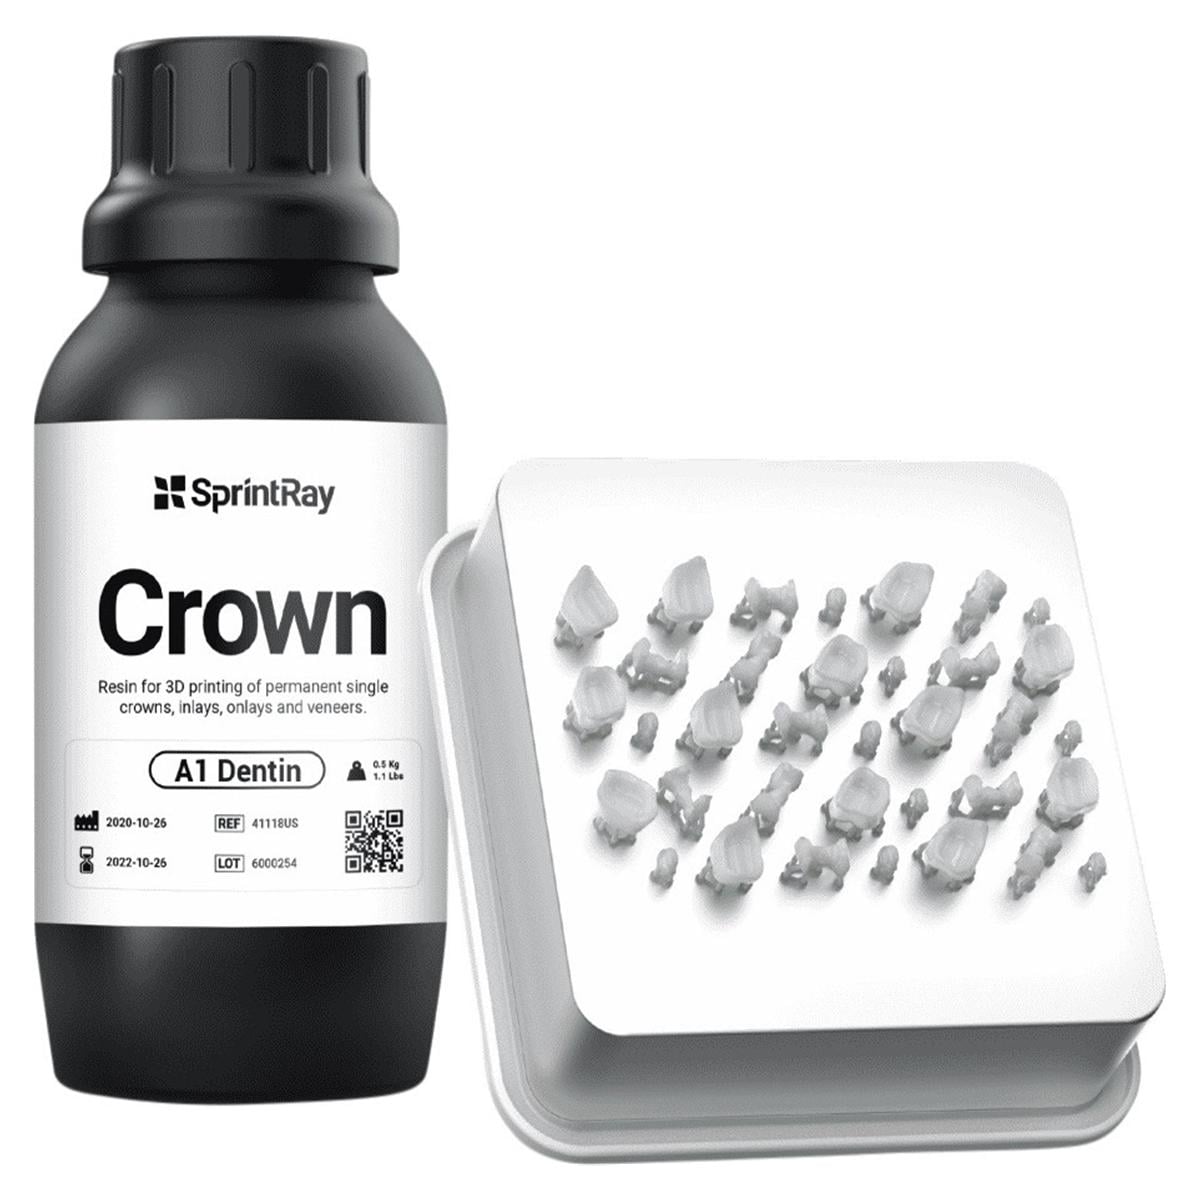 SprintRay Crown - A1 Dentin, Flasche 500 g